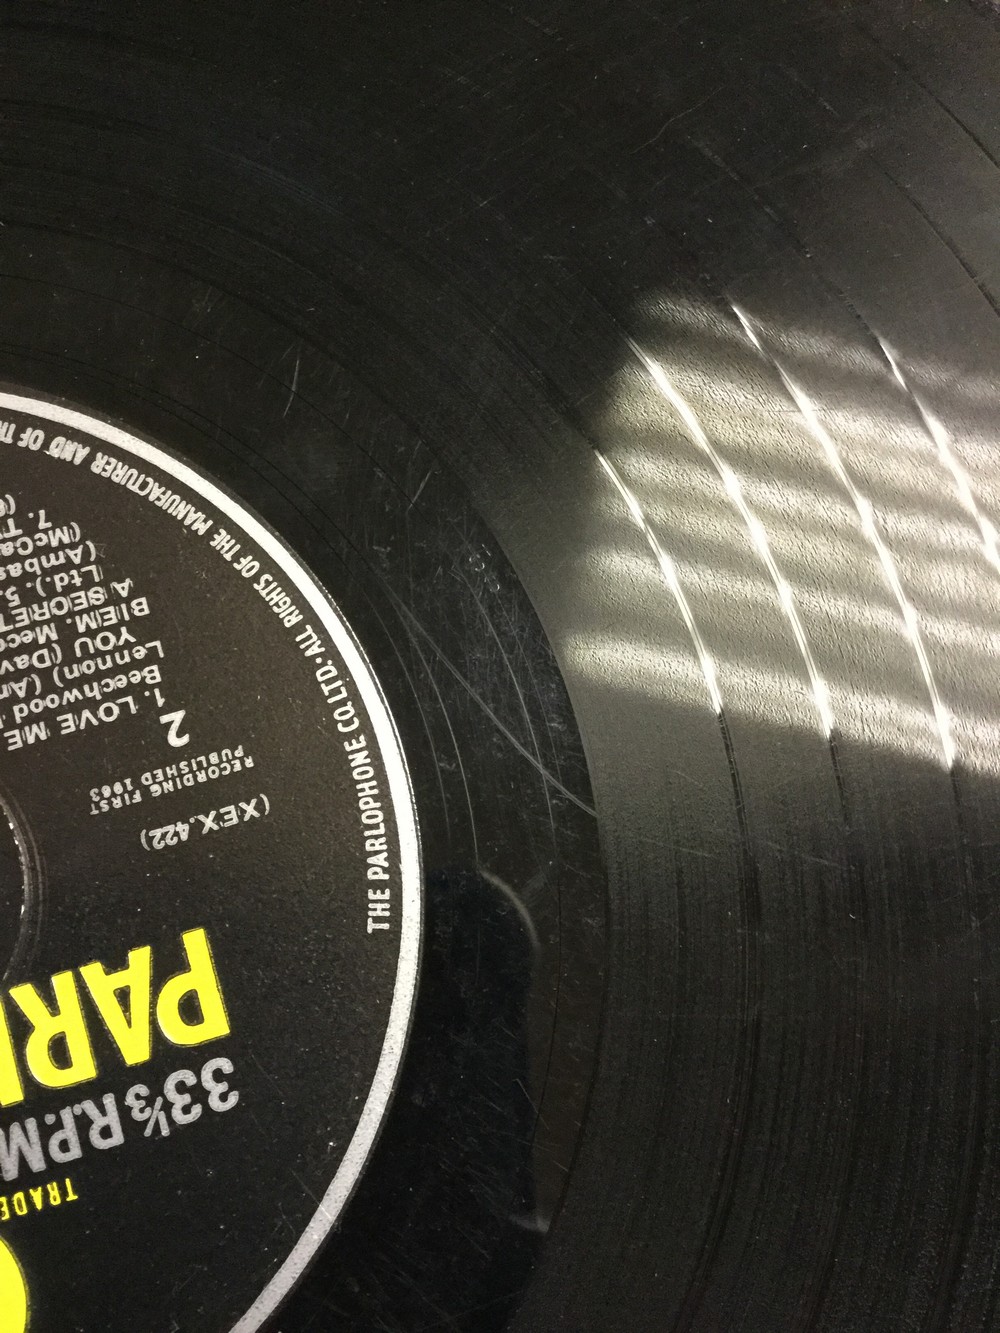 Vinyl Records - LP's The Beatles, - Image 5 of 6